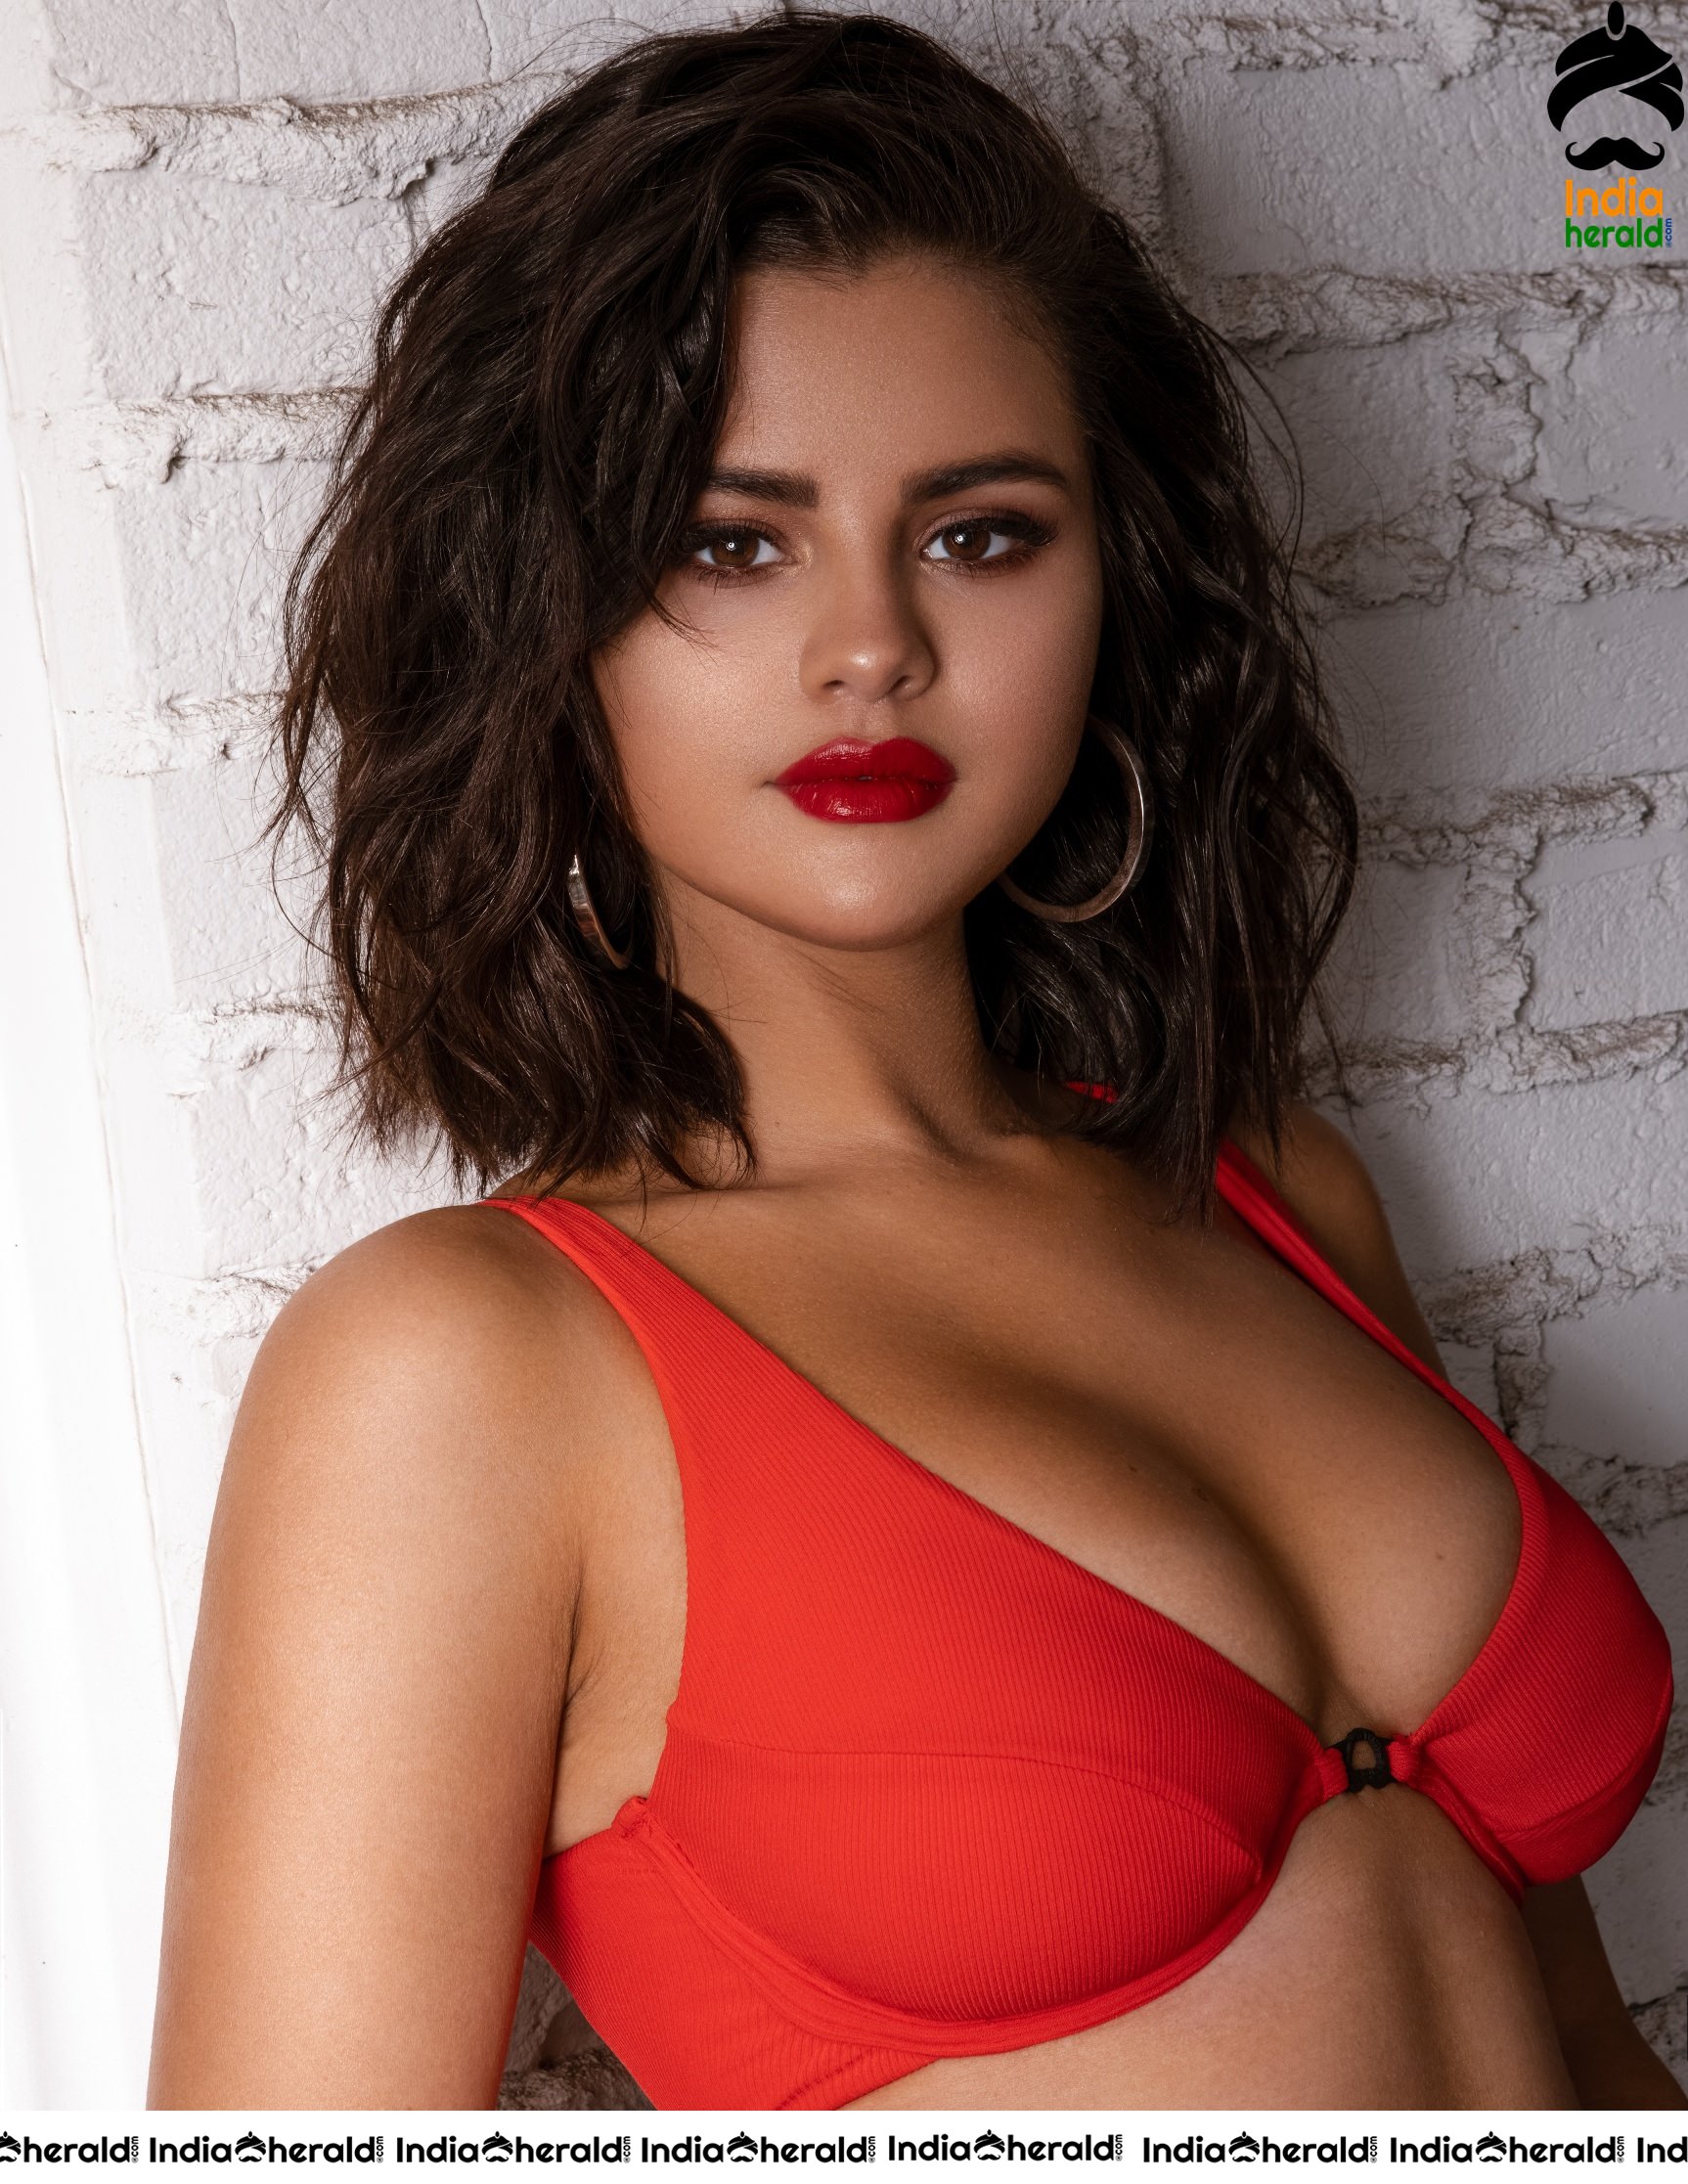 Selena Gomez HOT Photos exposing Big Cleavage while Modeling Swimsuits For Krahs Swimwear